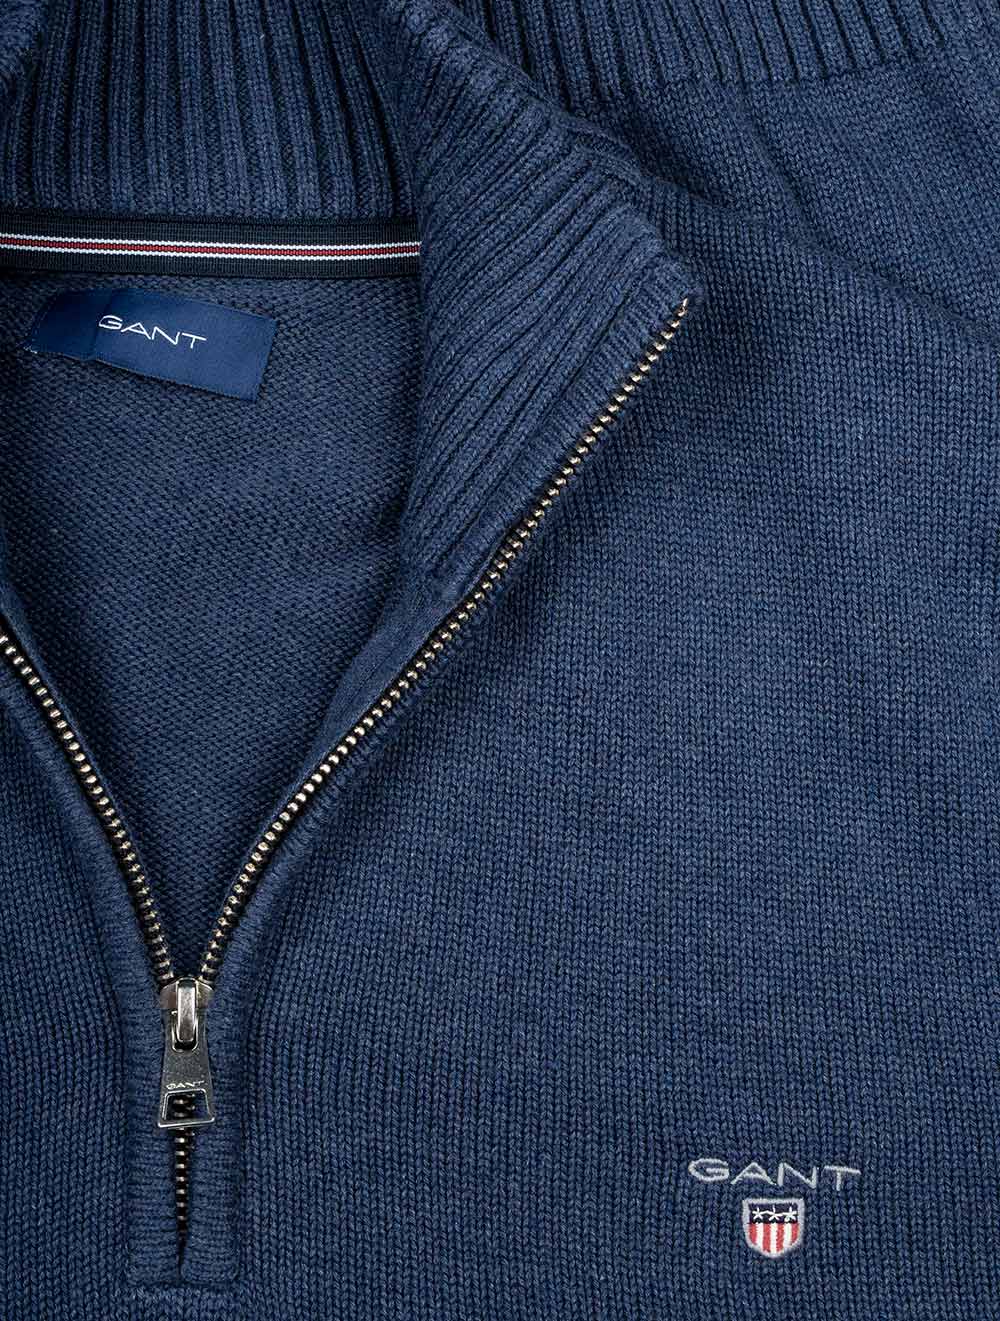 Casual Cotton Half-Zip Sweater Marine Melange